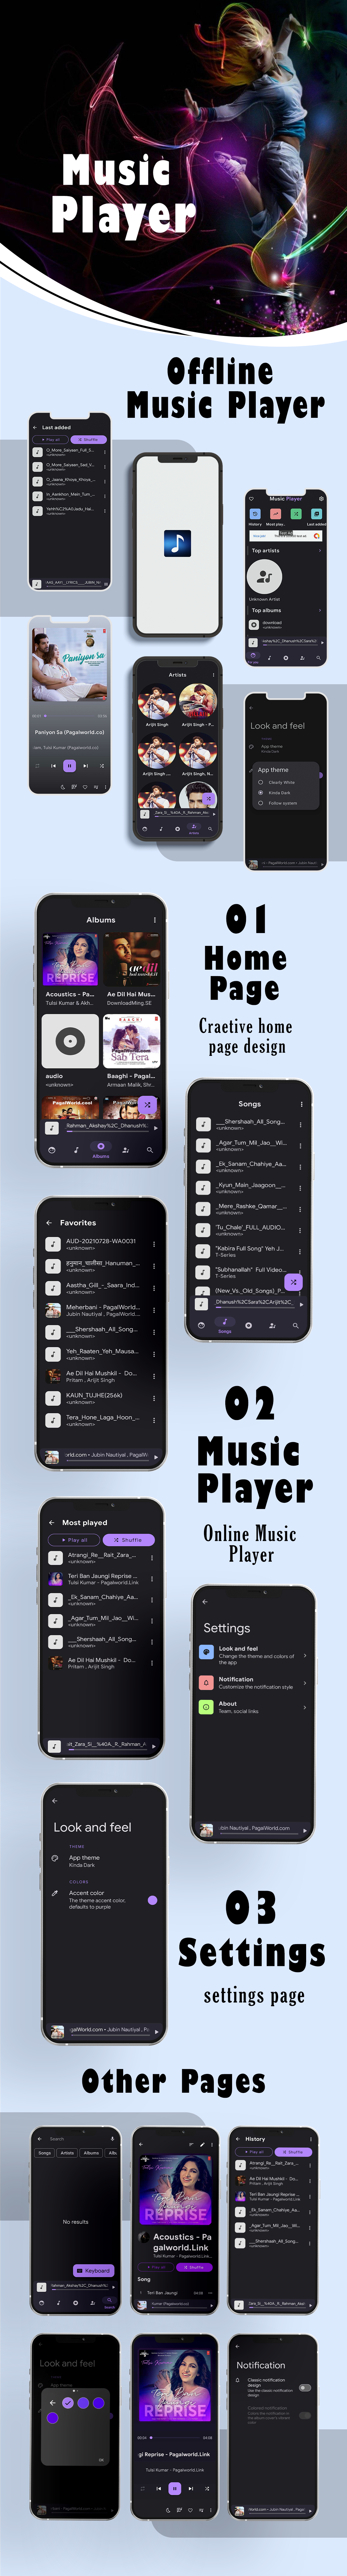 Rexo Music Player | Oflline Music Player App | Admob Ads - 1